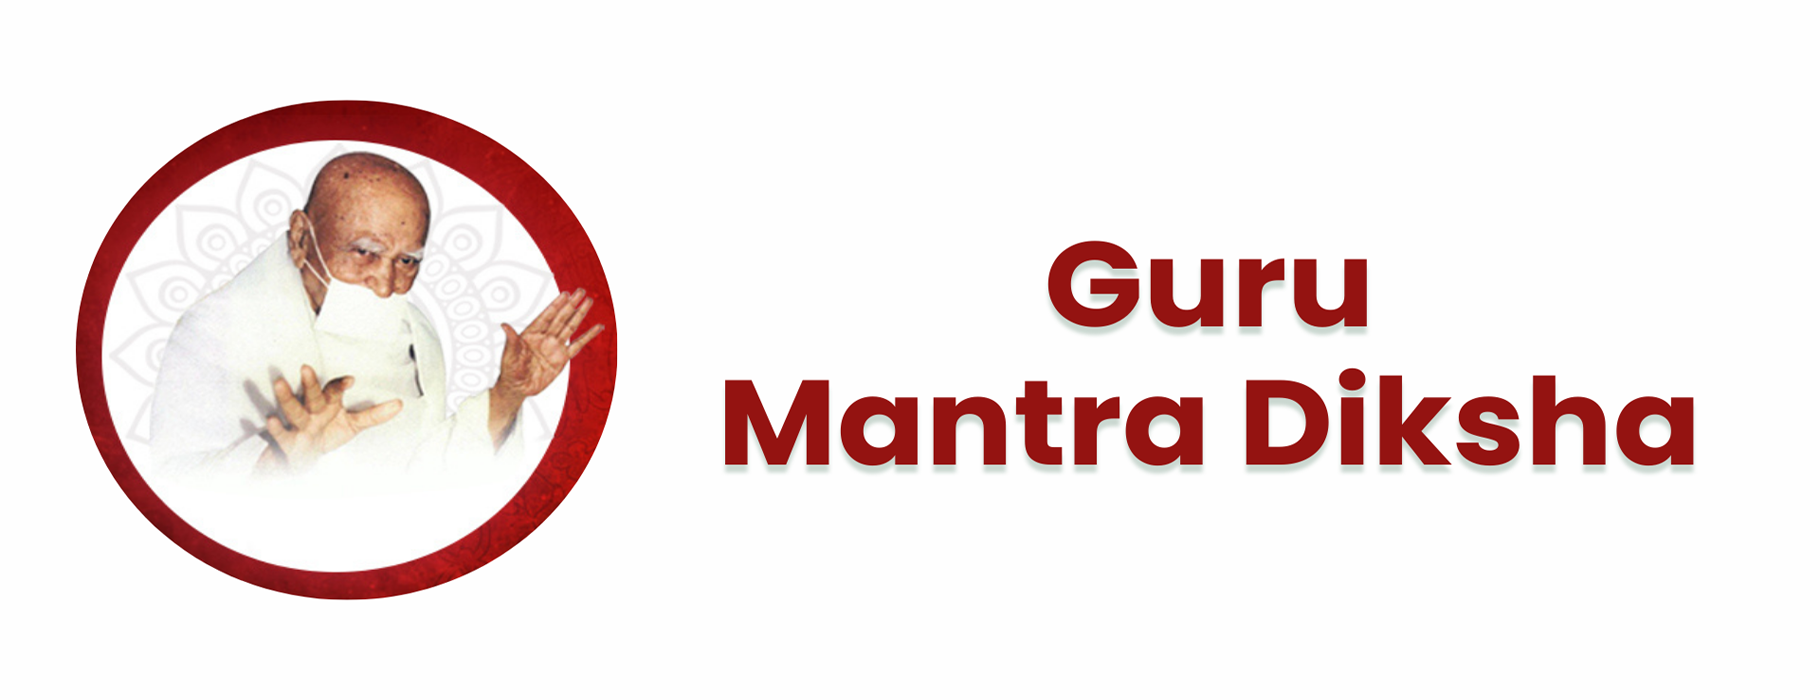 Guru Mantra Diksha